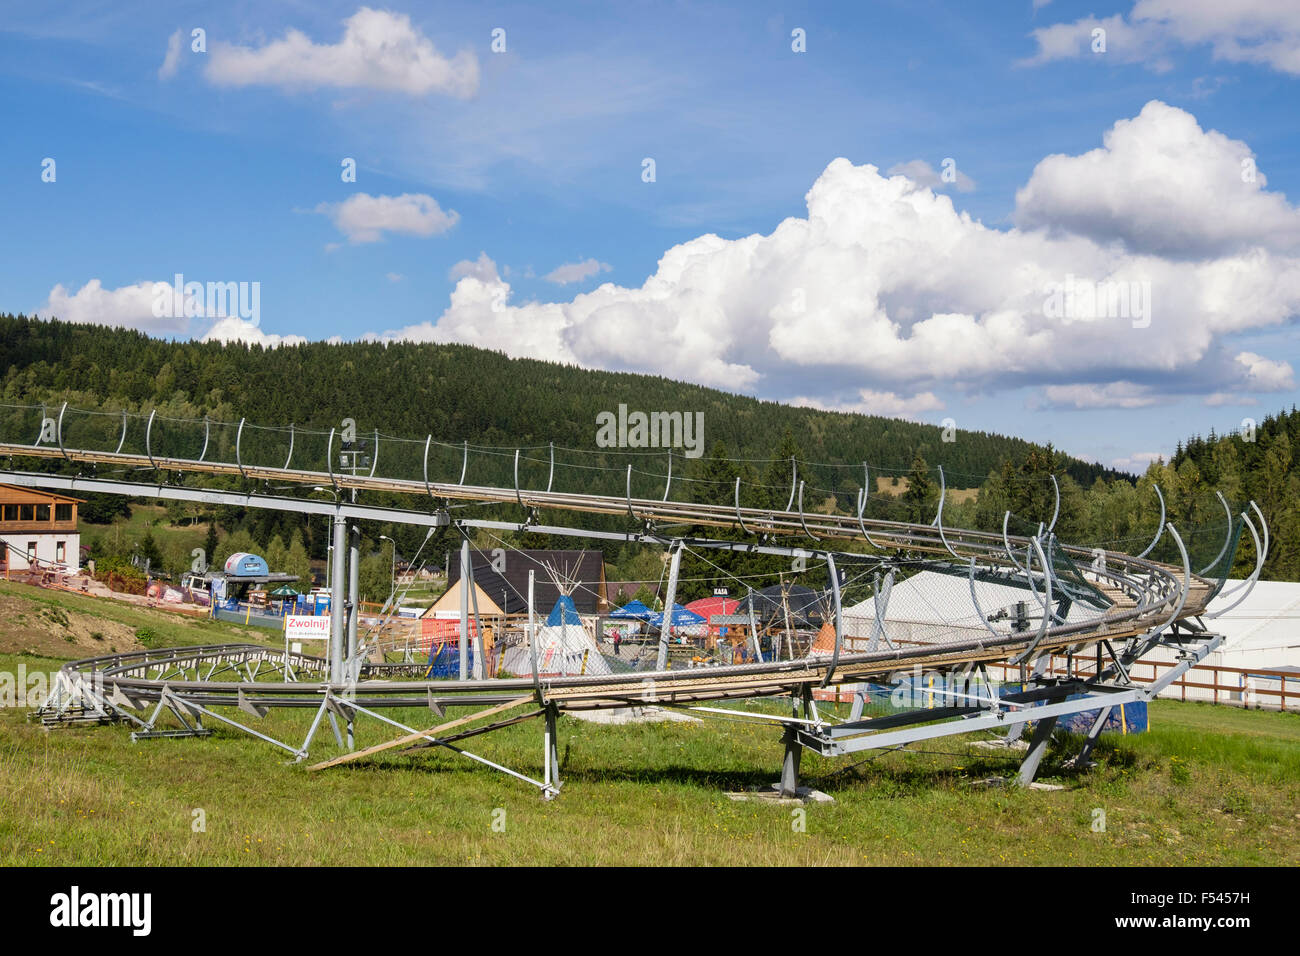 Wiegand slittino estivo sport struttura a scorrimento in Czarna Gora (Montagna Nera) ski resort. Klodzko, Bassa Slesia, Polonia Foto Stock